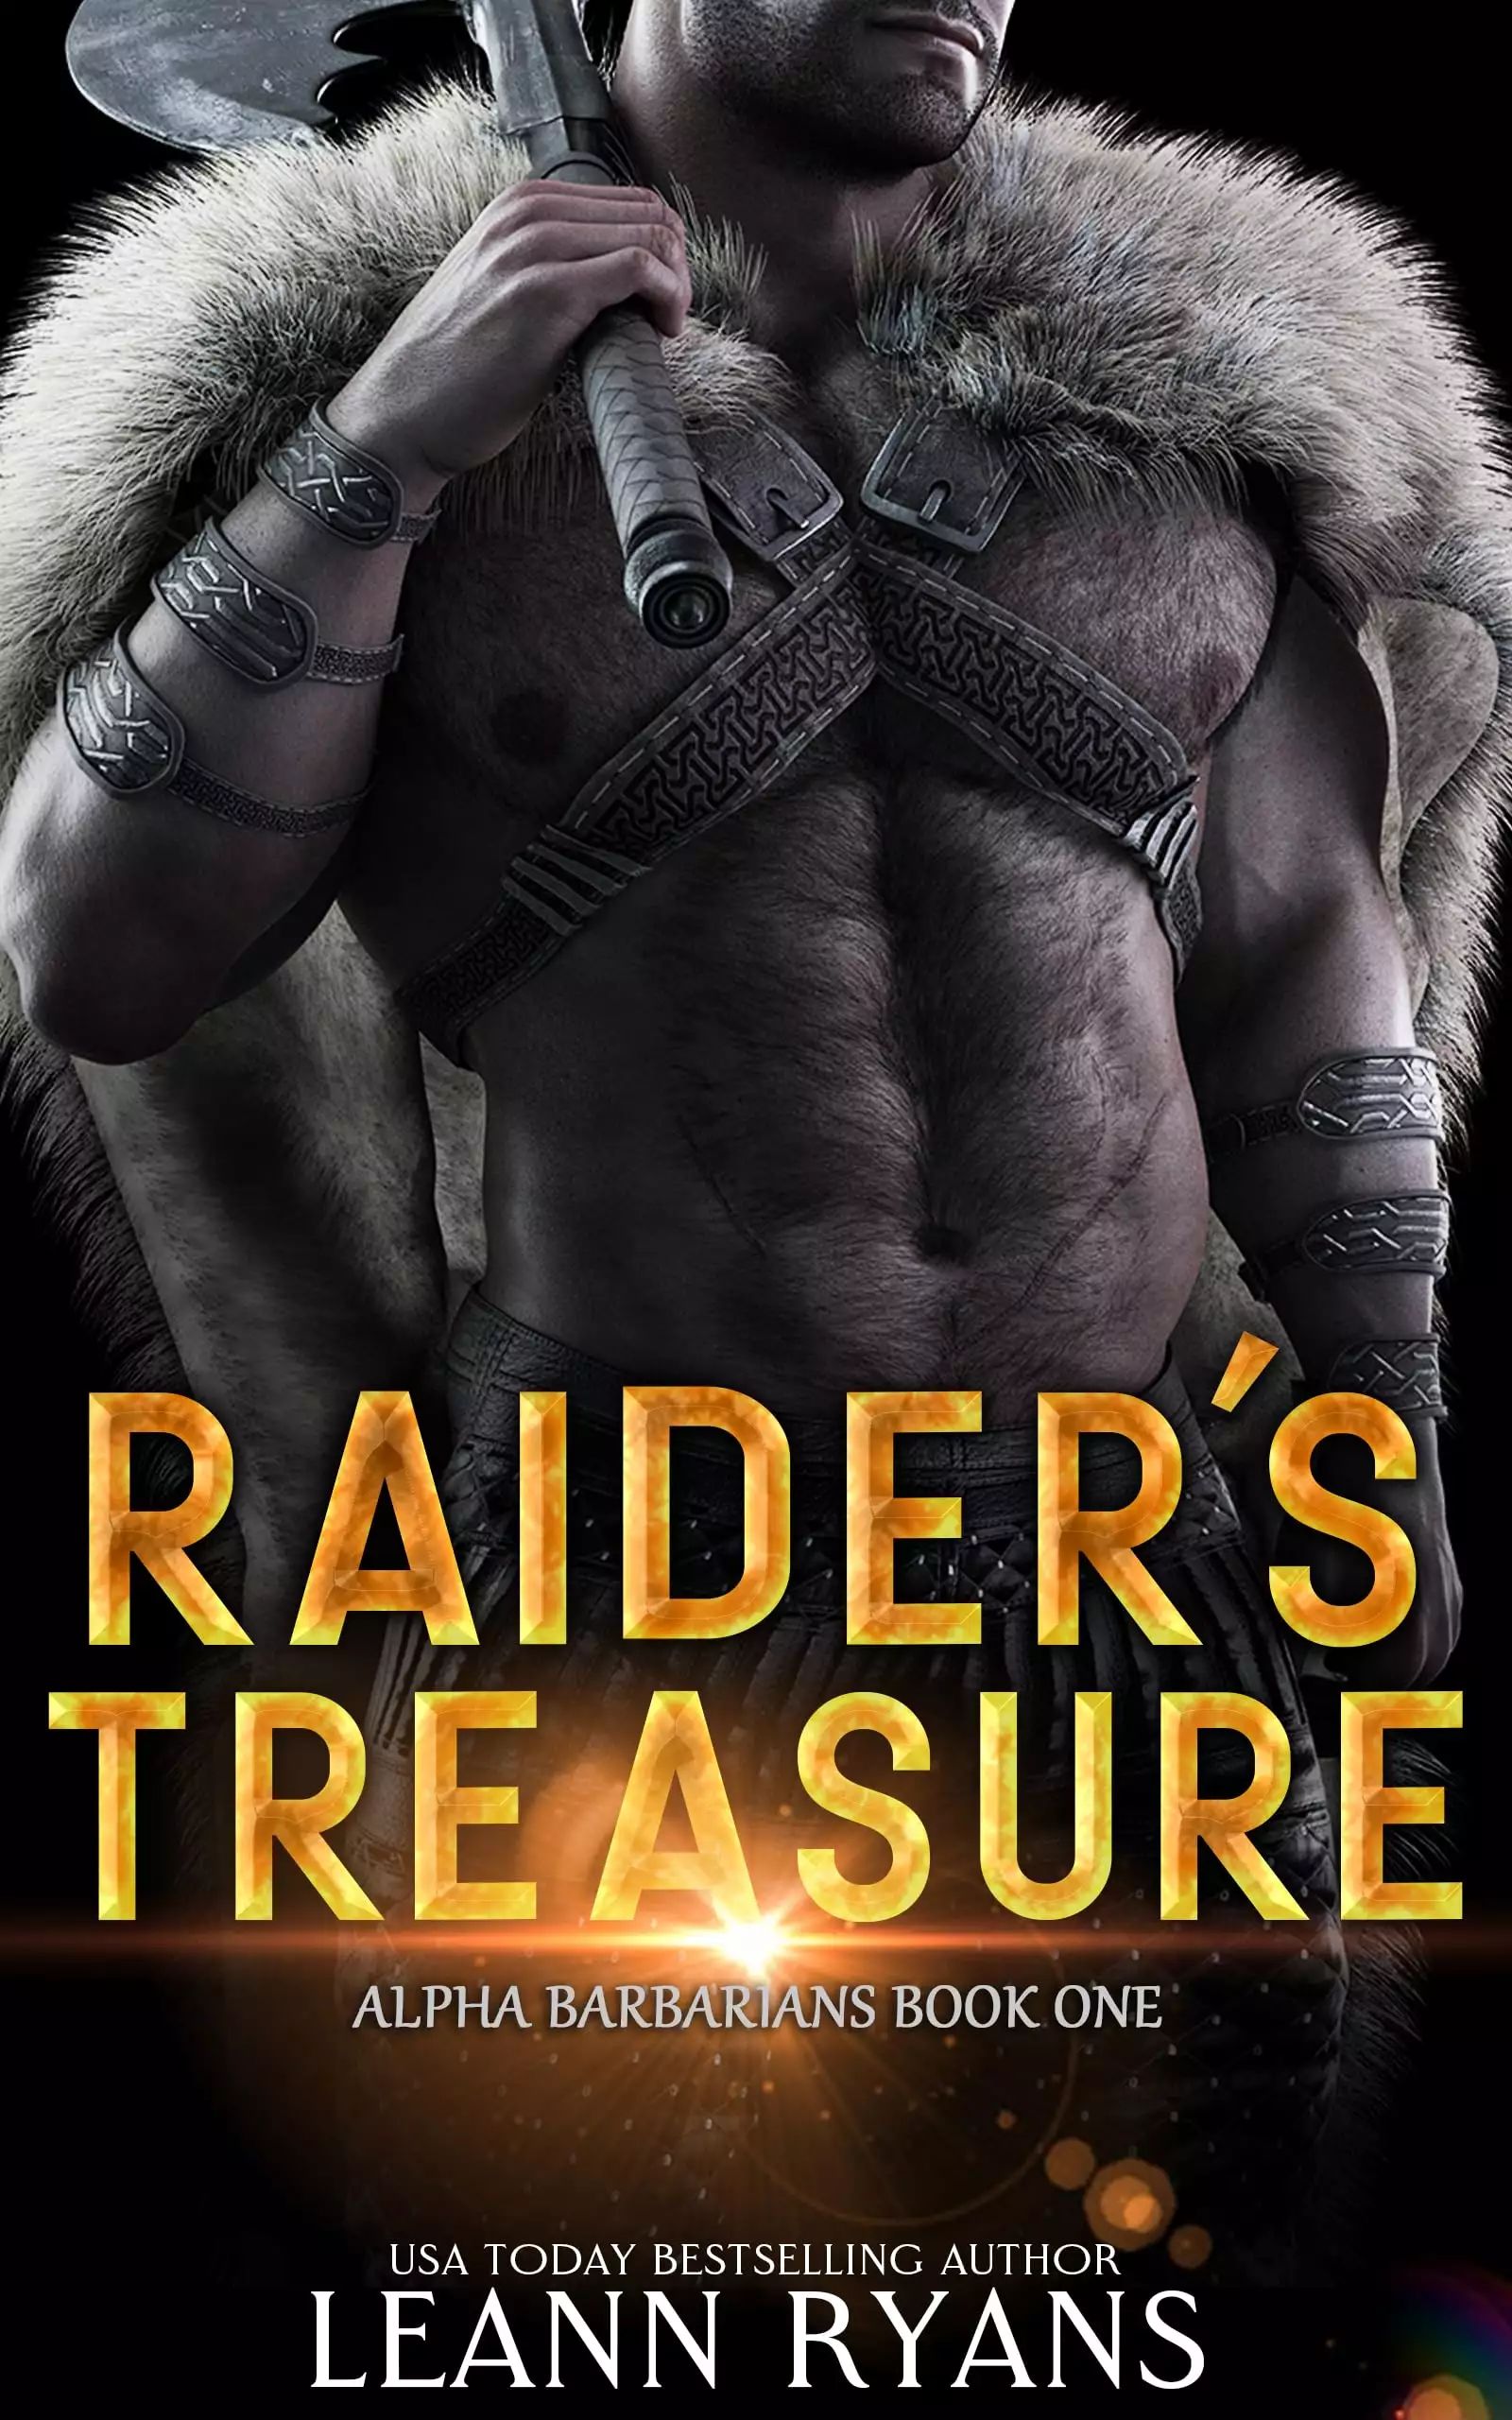 Raider’s Treasure: A Historical Fantasy Omegaverse Romance